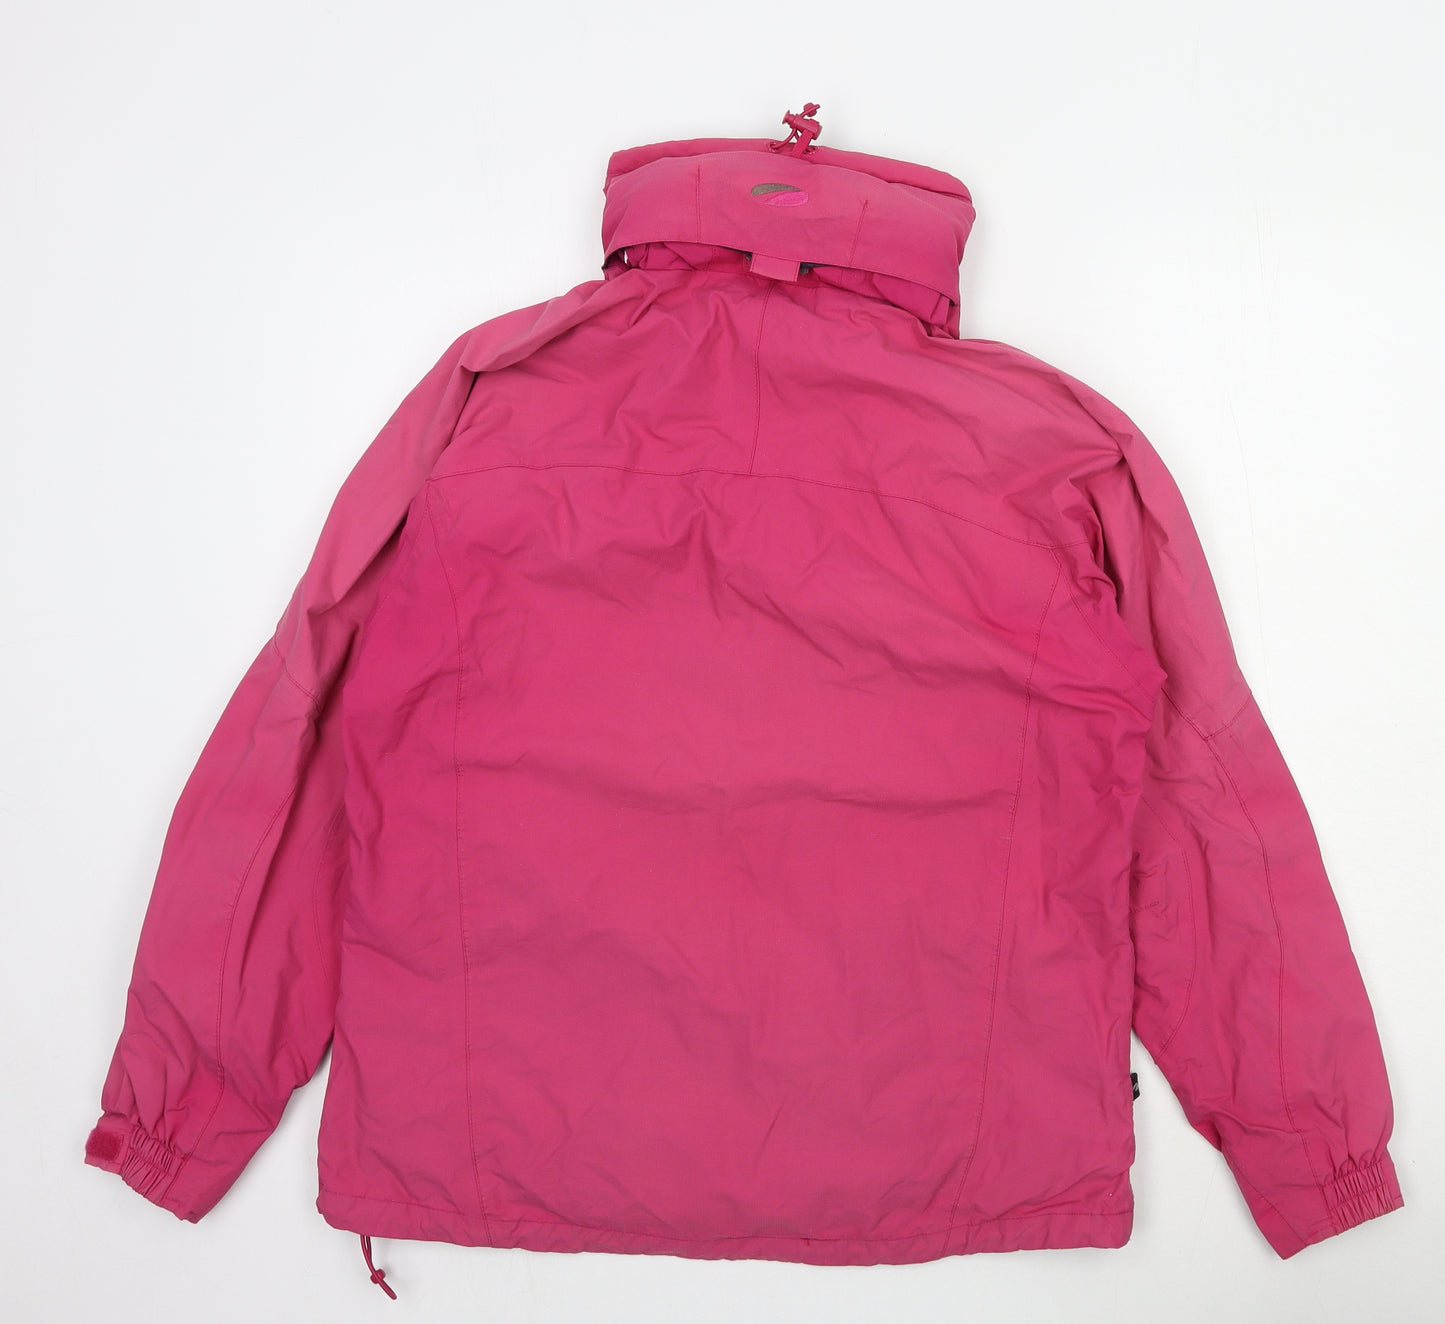 Mountain Life Womens Pink Jacket Size 12 Zip